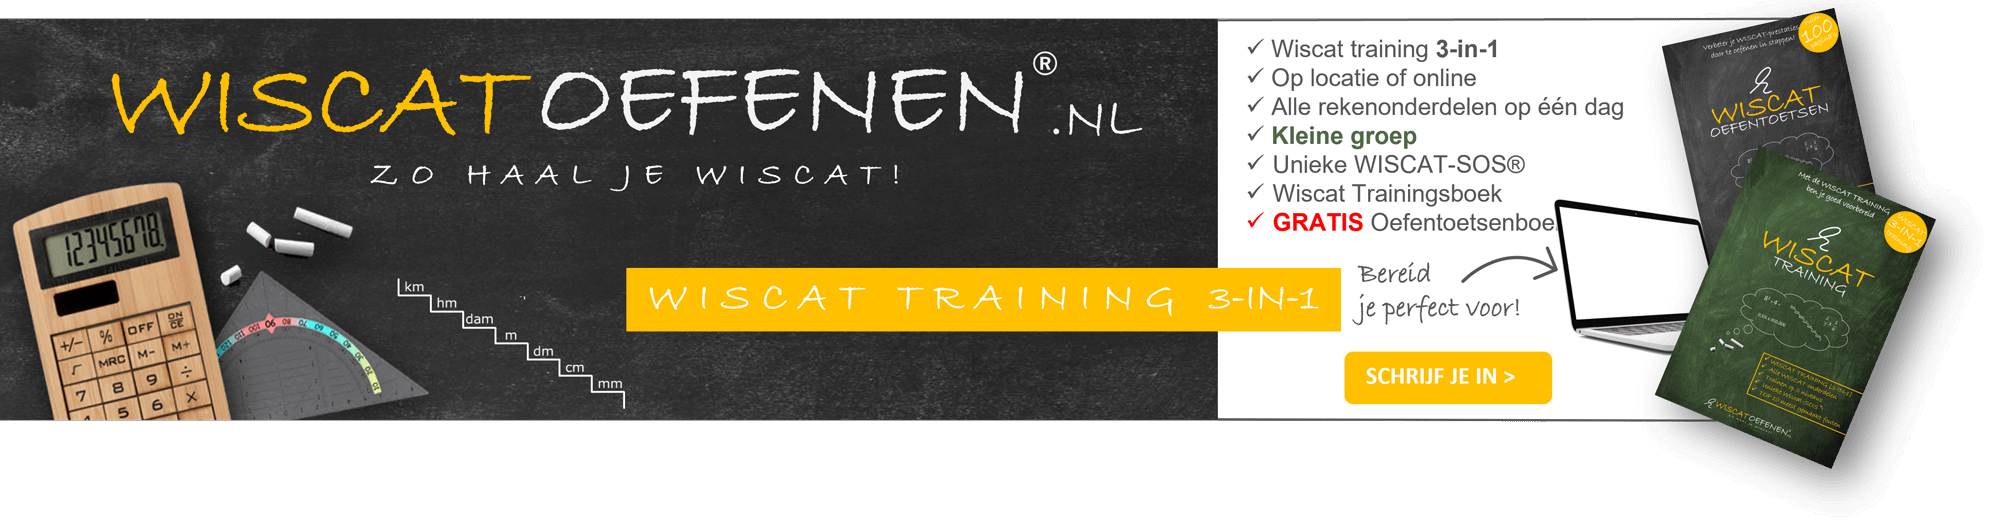 Wiscat training 3-in-1